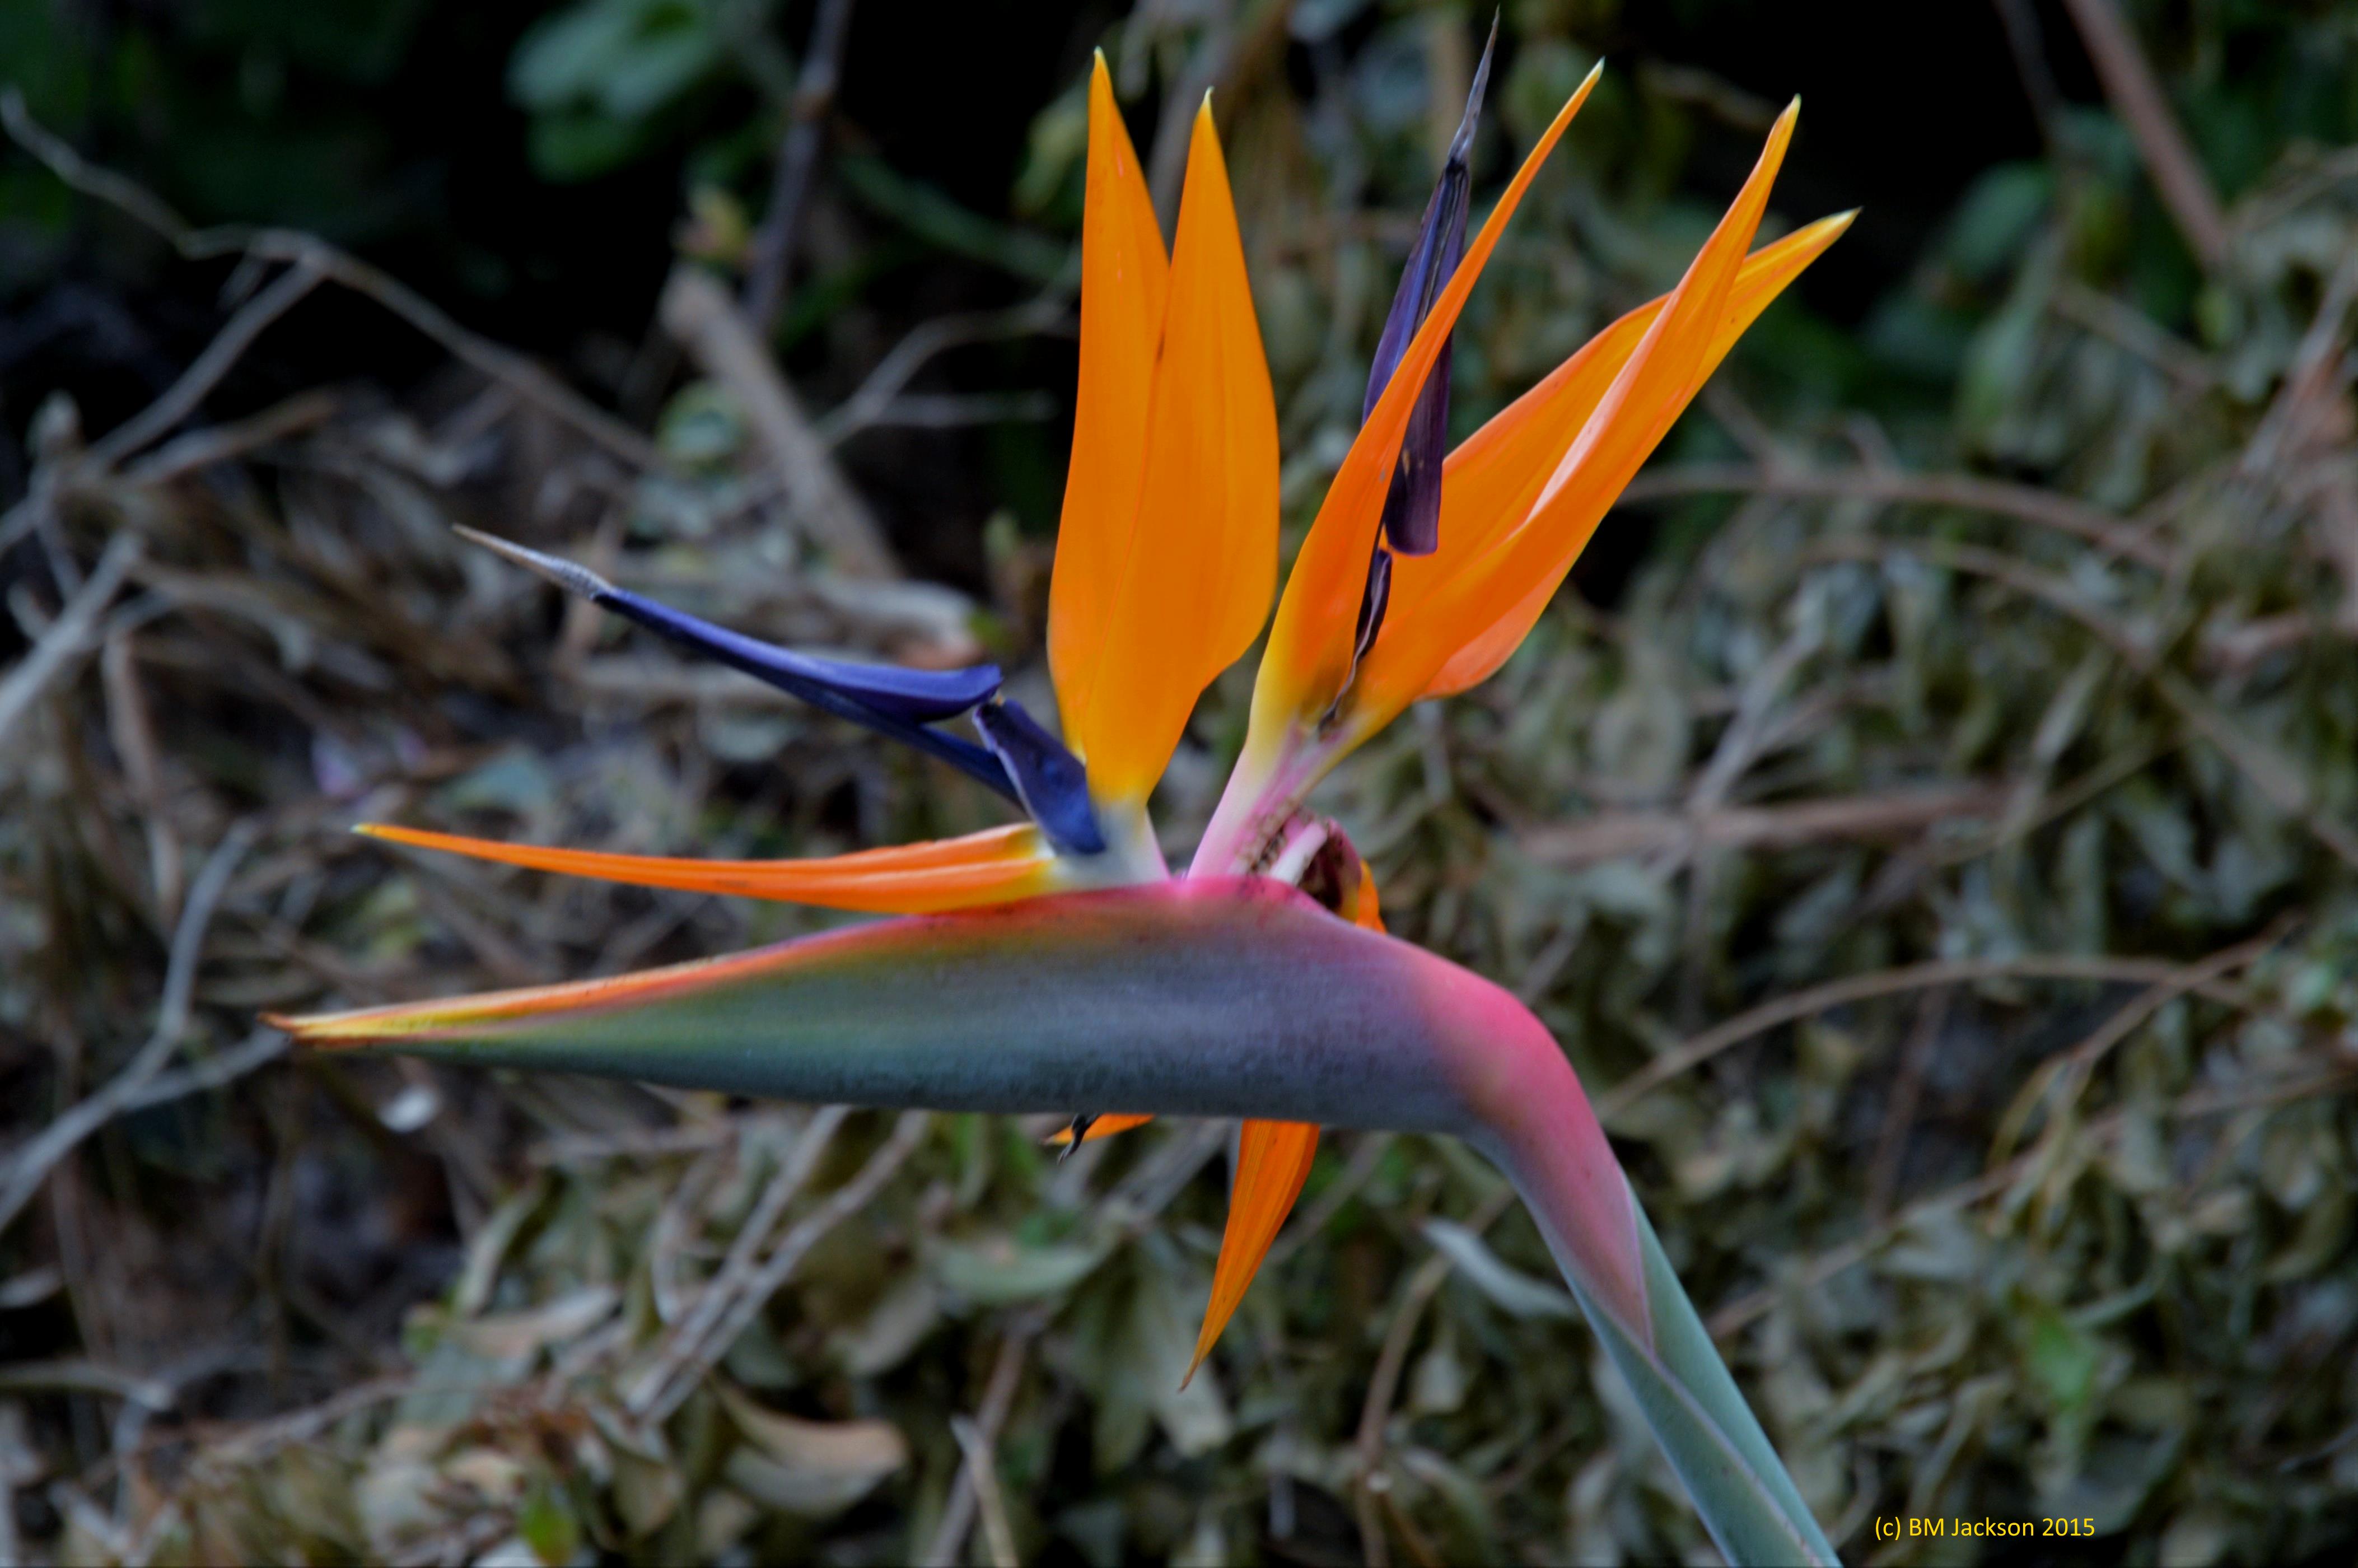 Tuesday's #Flower – Strelitzia reginae “Bird of Paradise” | BMJNature